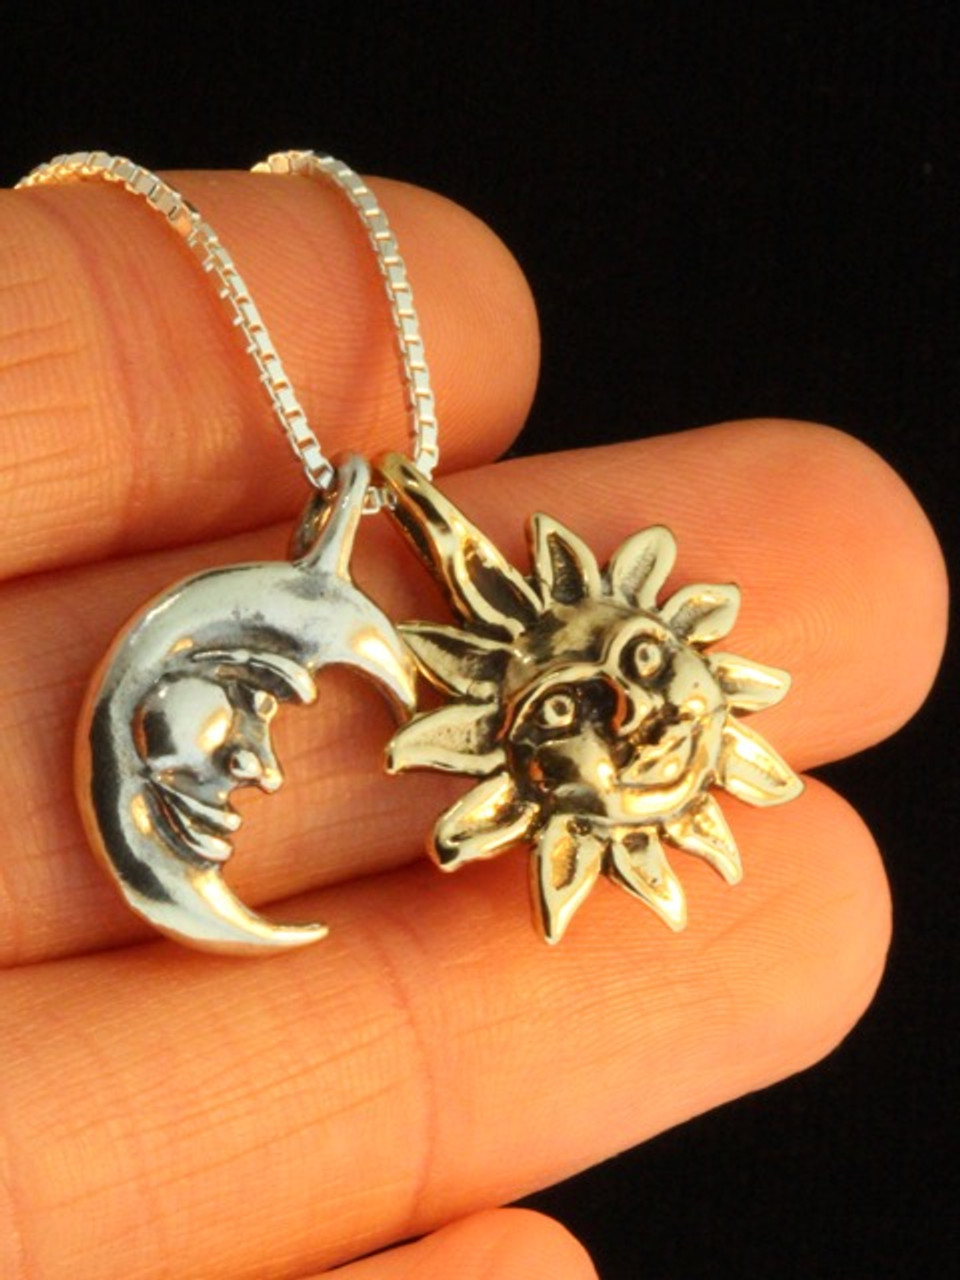 Sun Moon Necklace Solar Eclipse Necklace Celestial Sunshine 